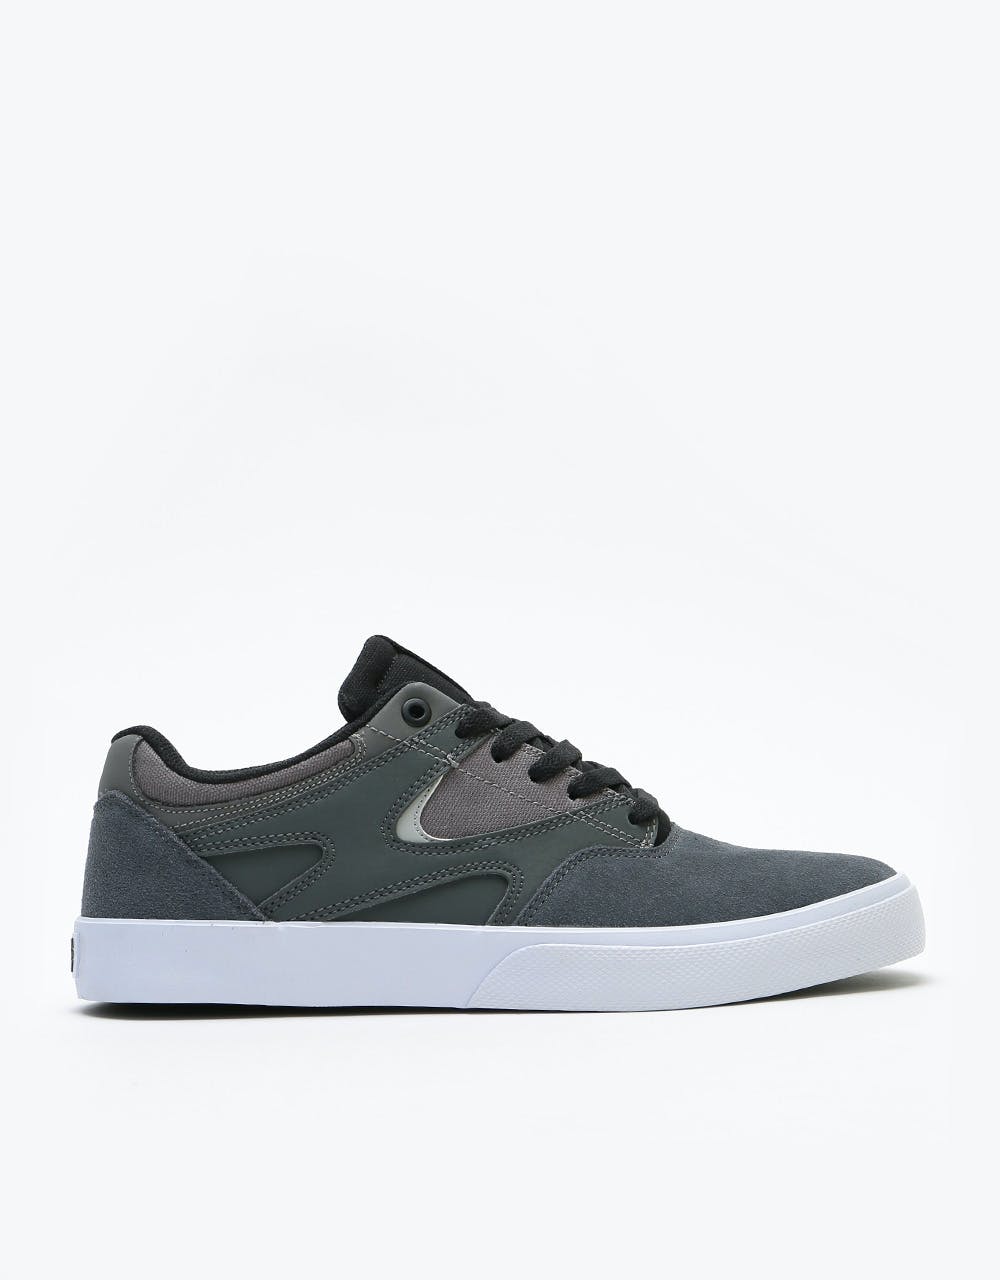 DC Kalis Vulc Skate Shoes - Grey/Black/Red